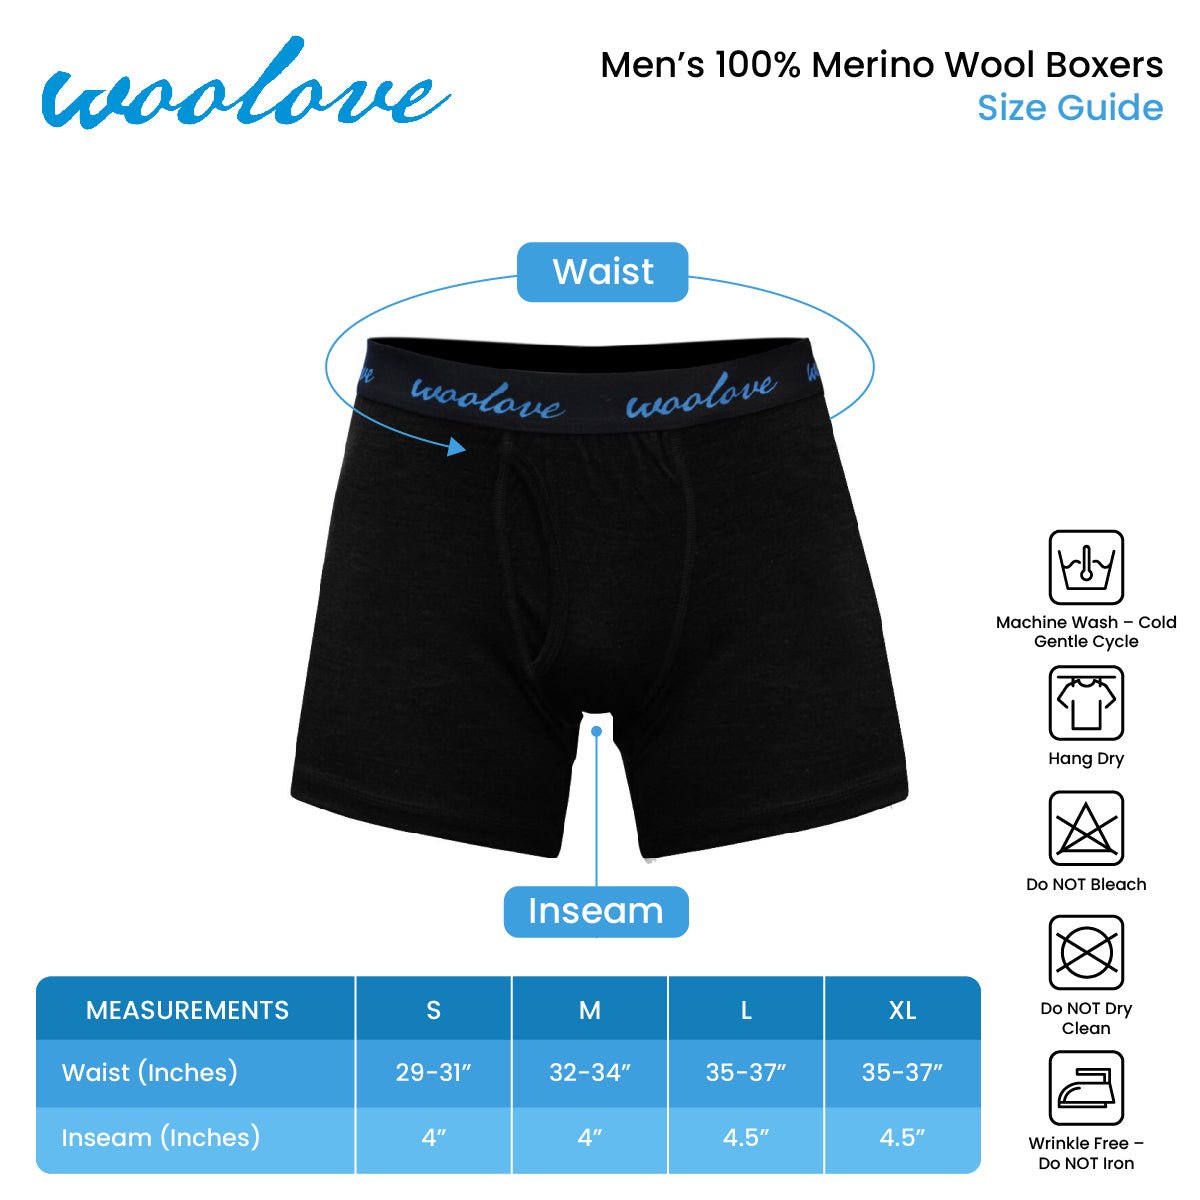 Men's 32 Degrees Cool Comfort Nylon Mesh Quick Dry Stretch Boxer Brief/ Underwear